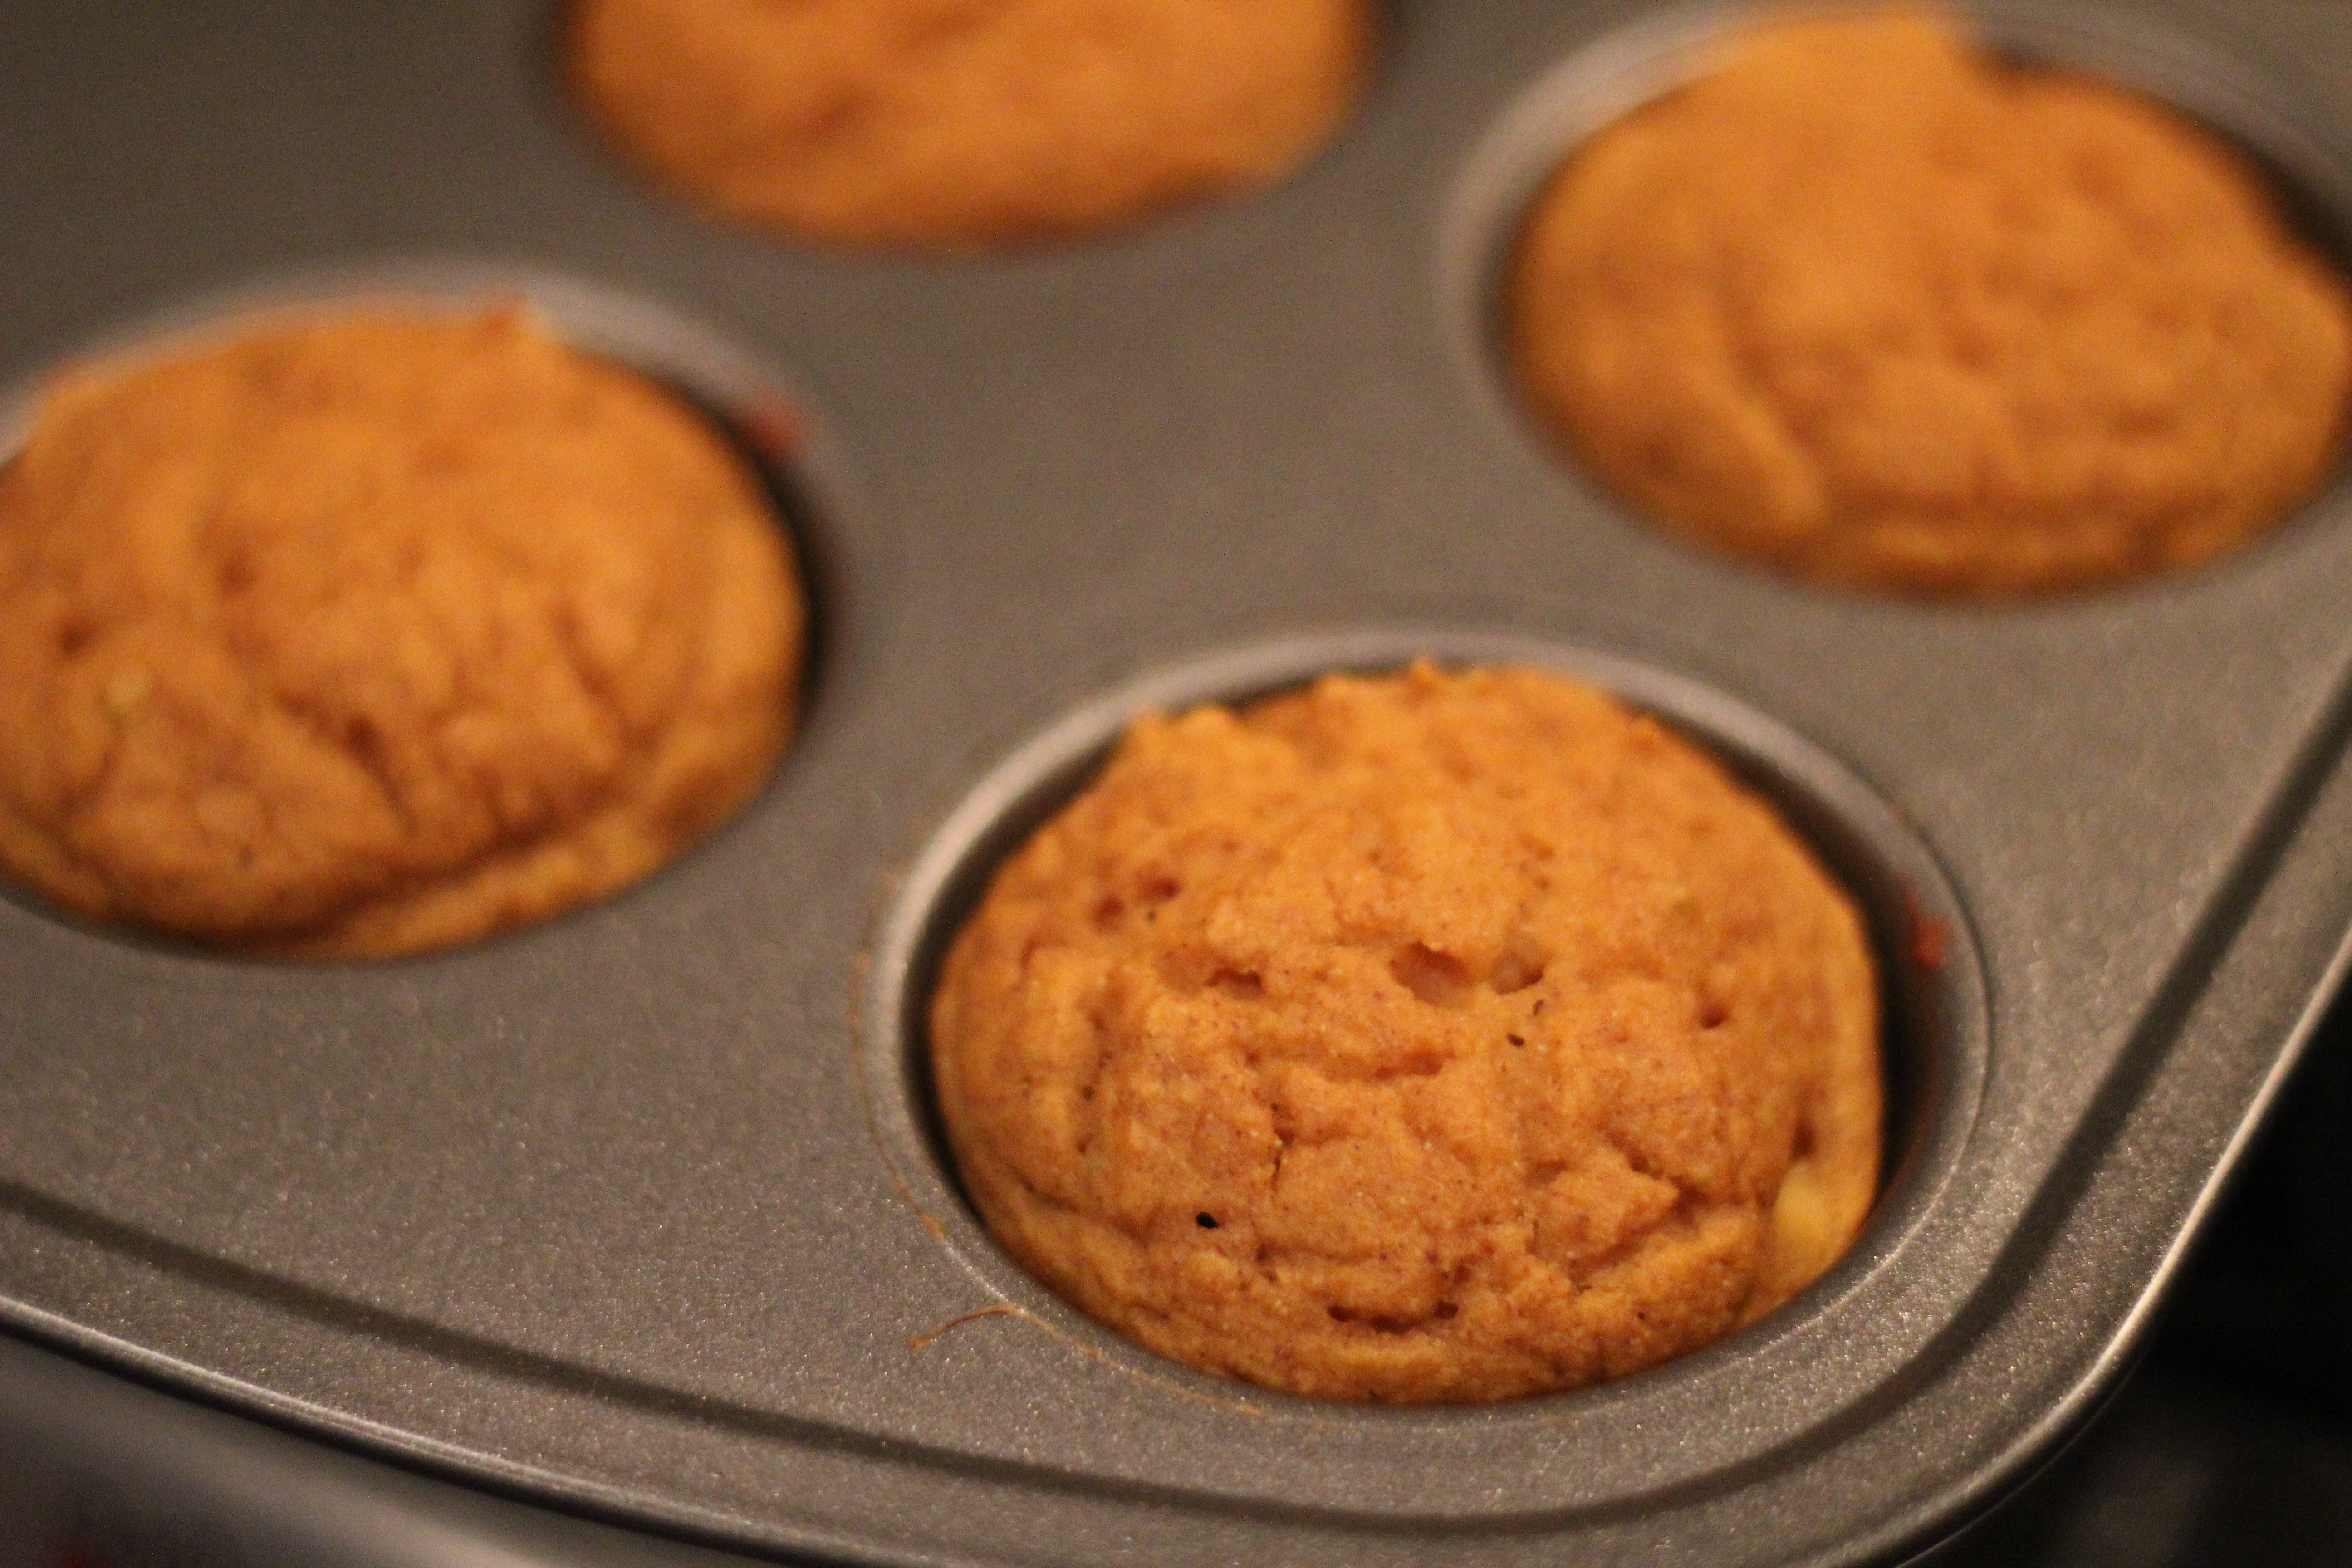 Healthy Pumpkin Muffins With Applesauce
 Pumpkin Applesauce Muffins Trim Healthy Mama E Grassfed